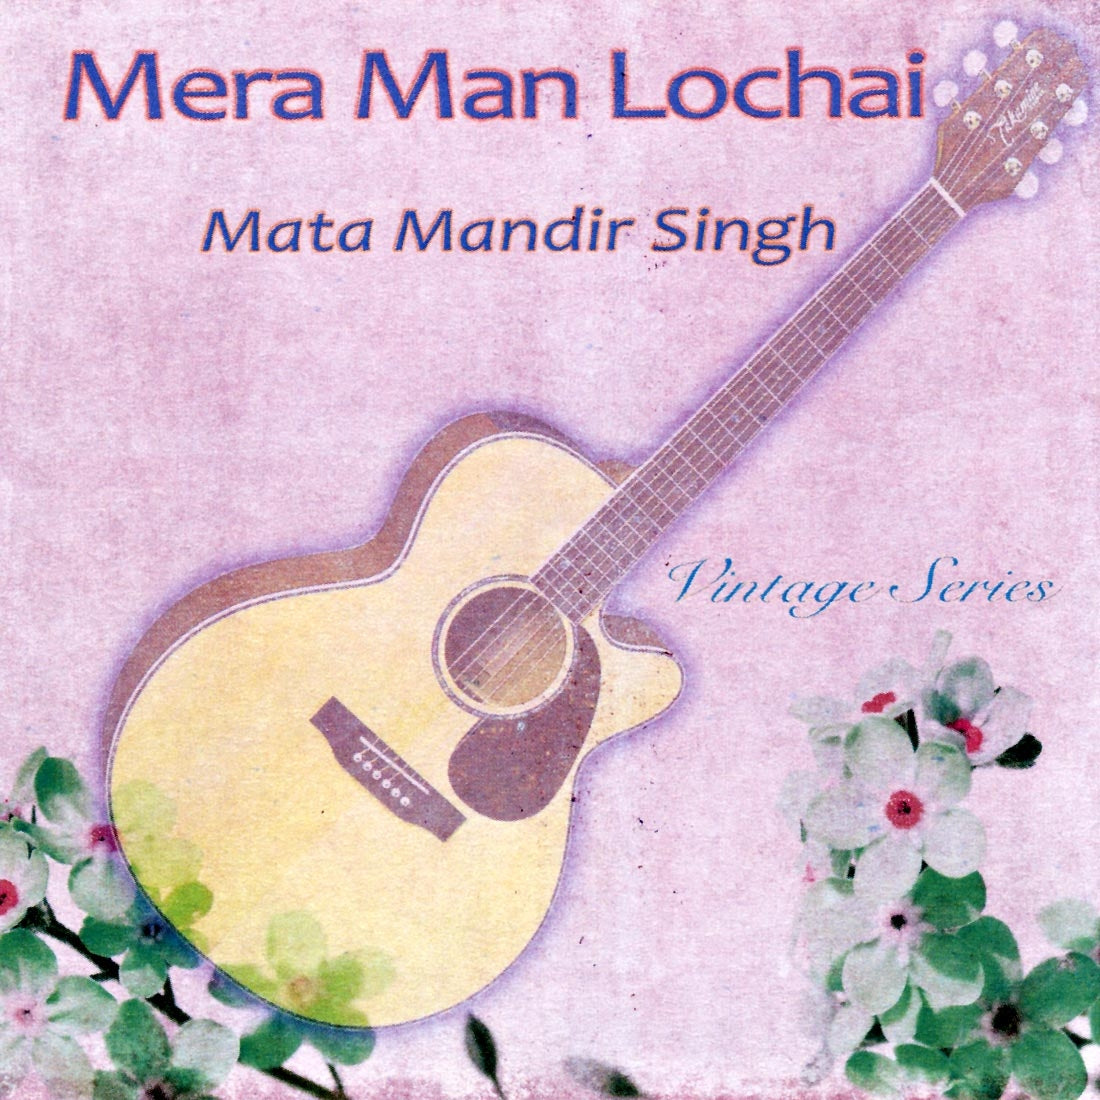 Mera Man Lochai - Mata Mandir Singh komplett